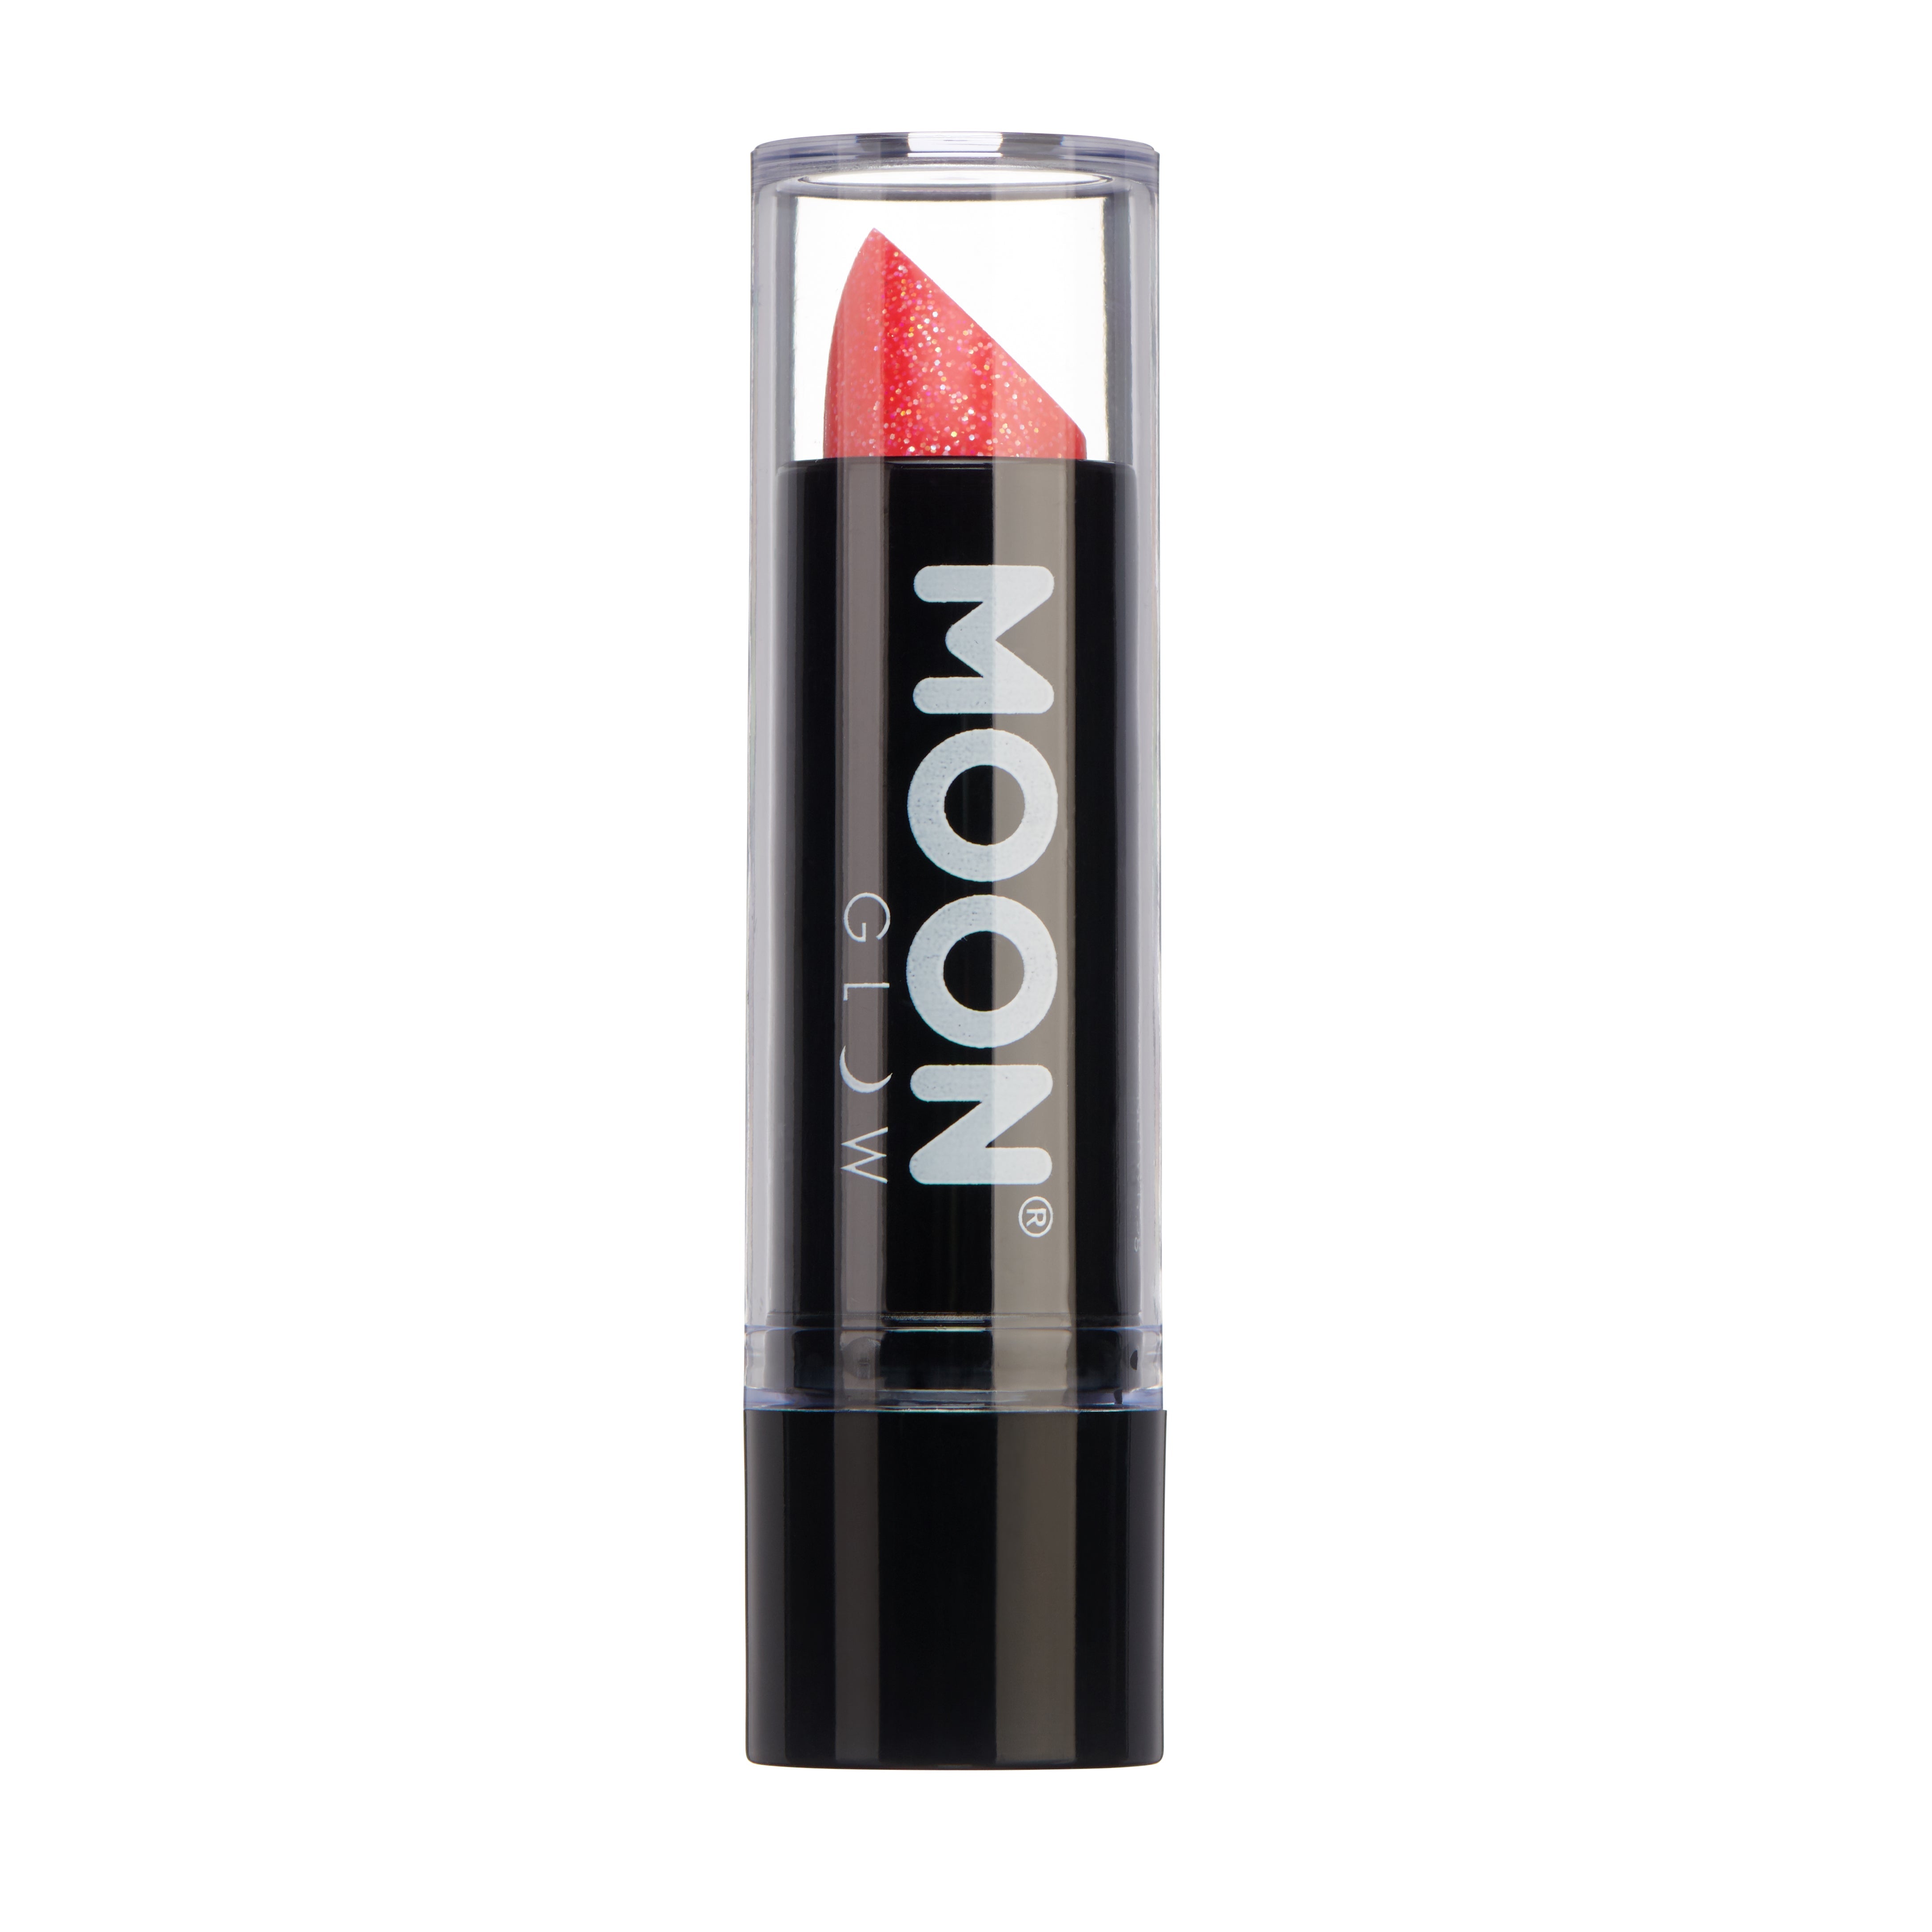 Magenta - Neon UV Glow Blacklight Glitter Lipstick, 5g. Cosmetically certified, FDA & Health Canada compliant and cruelty free.